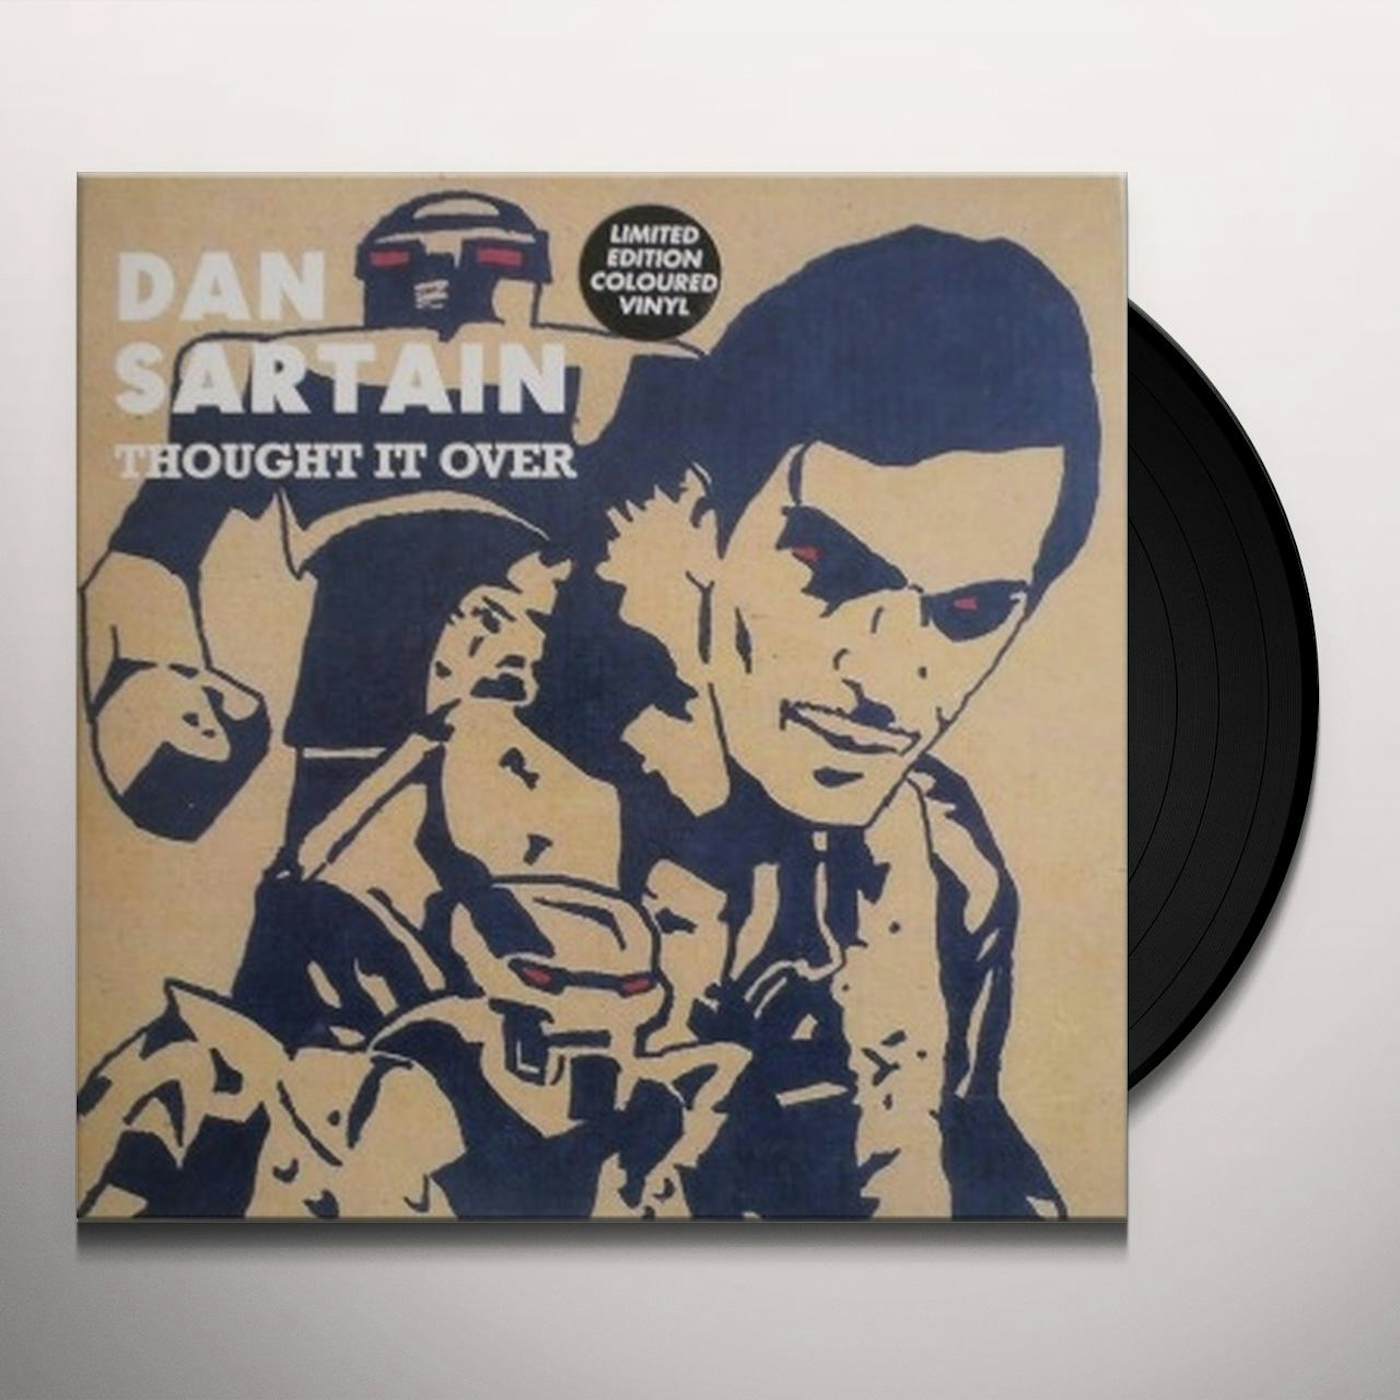 Dan Sartain Thought It Over Vinyl Record